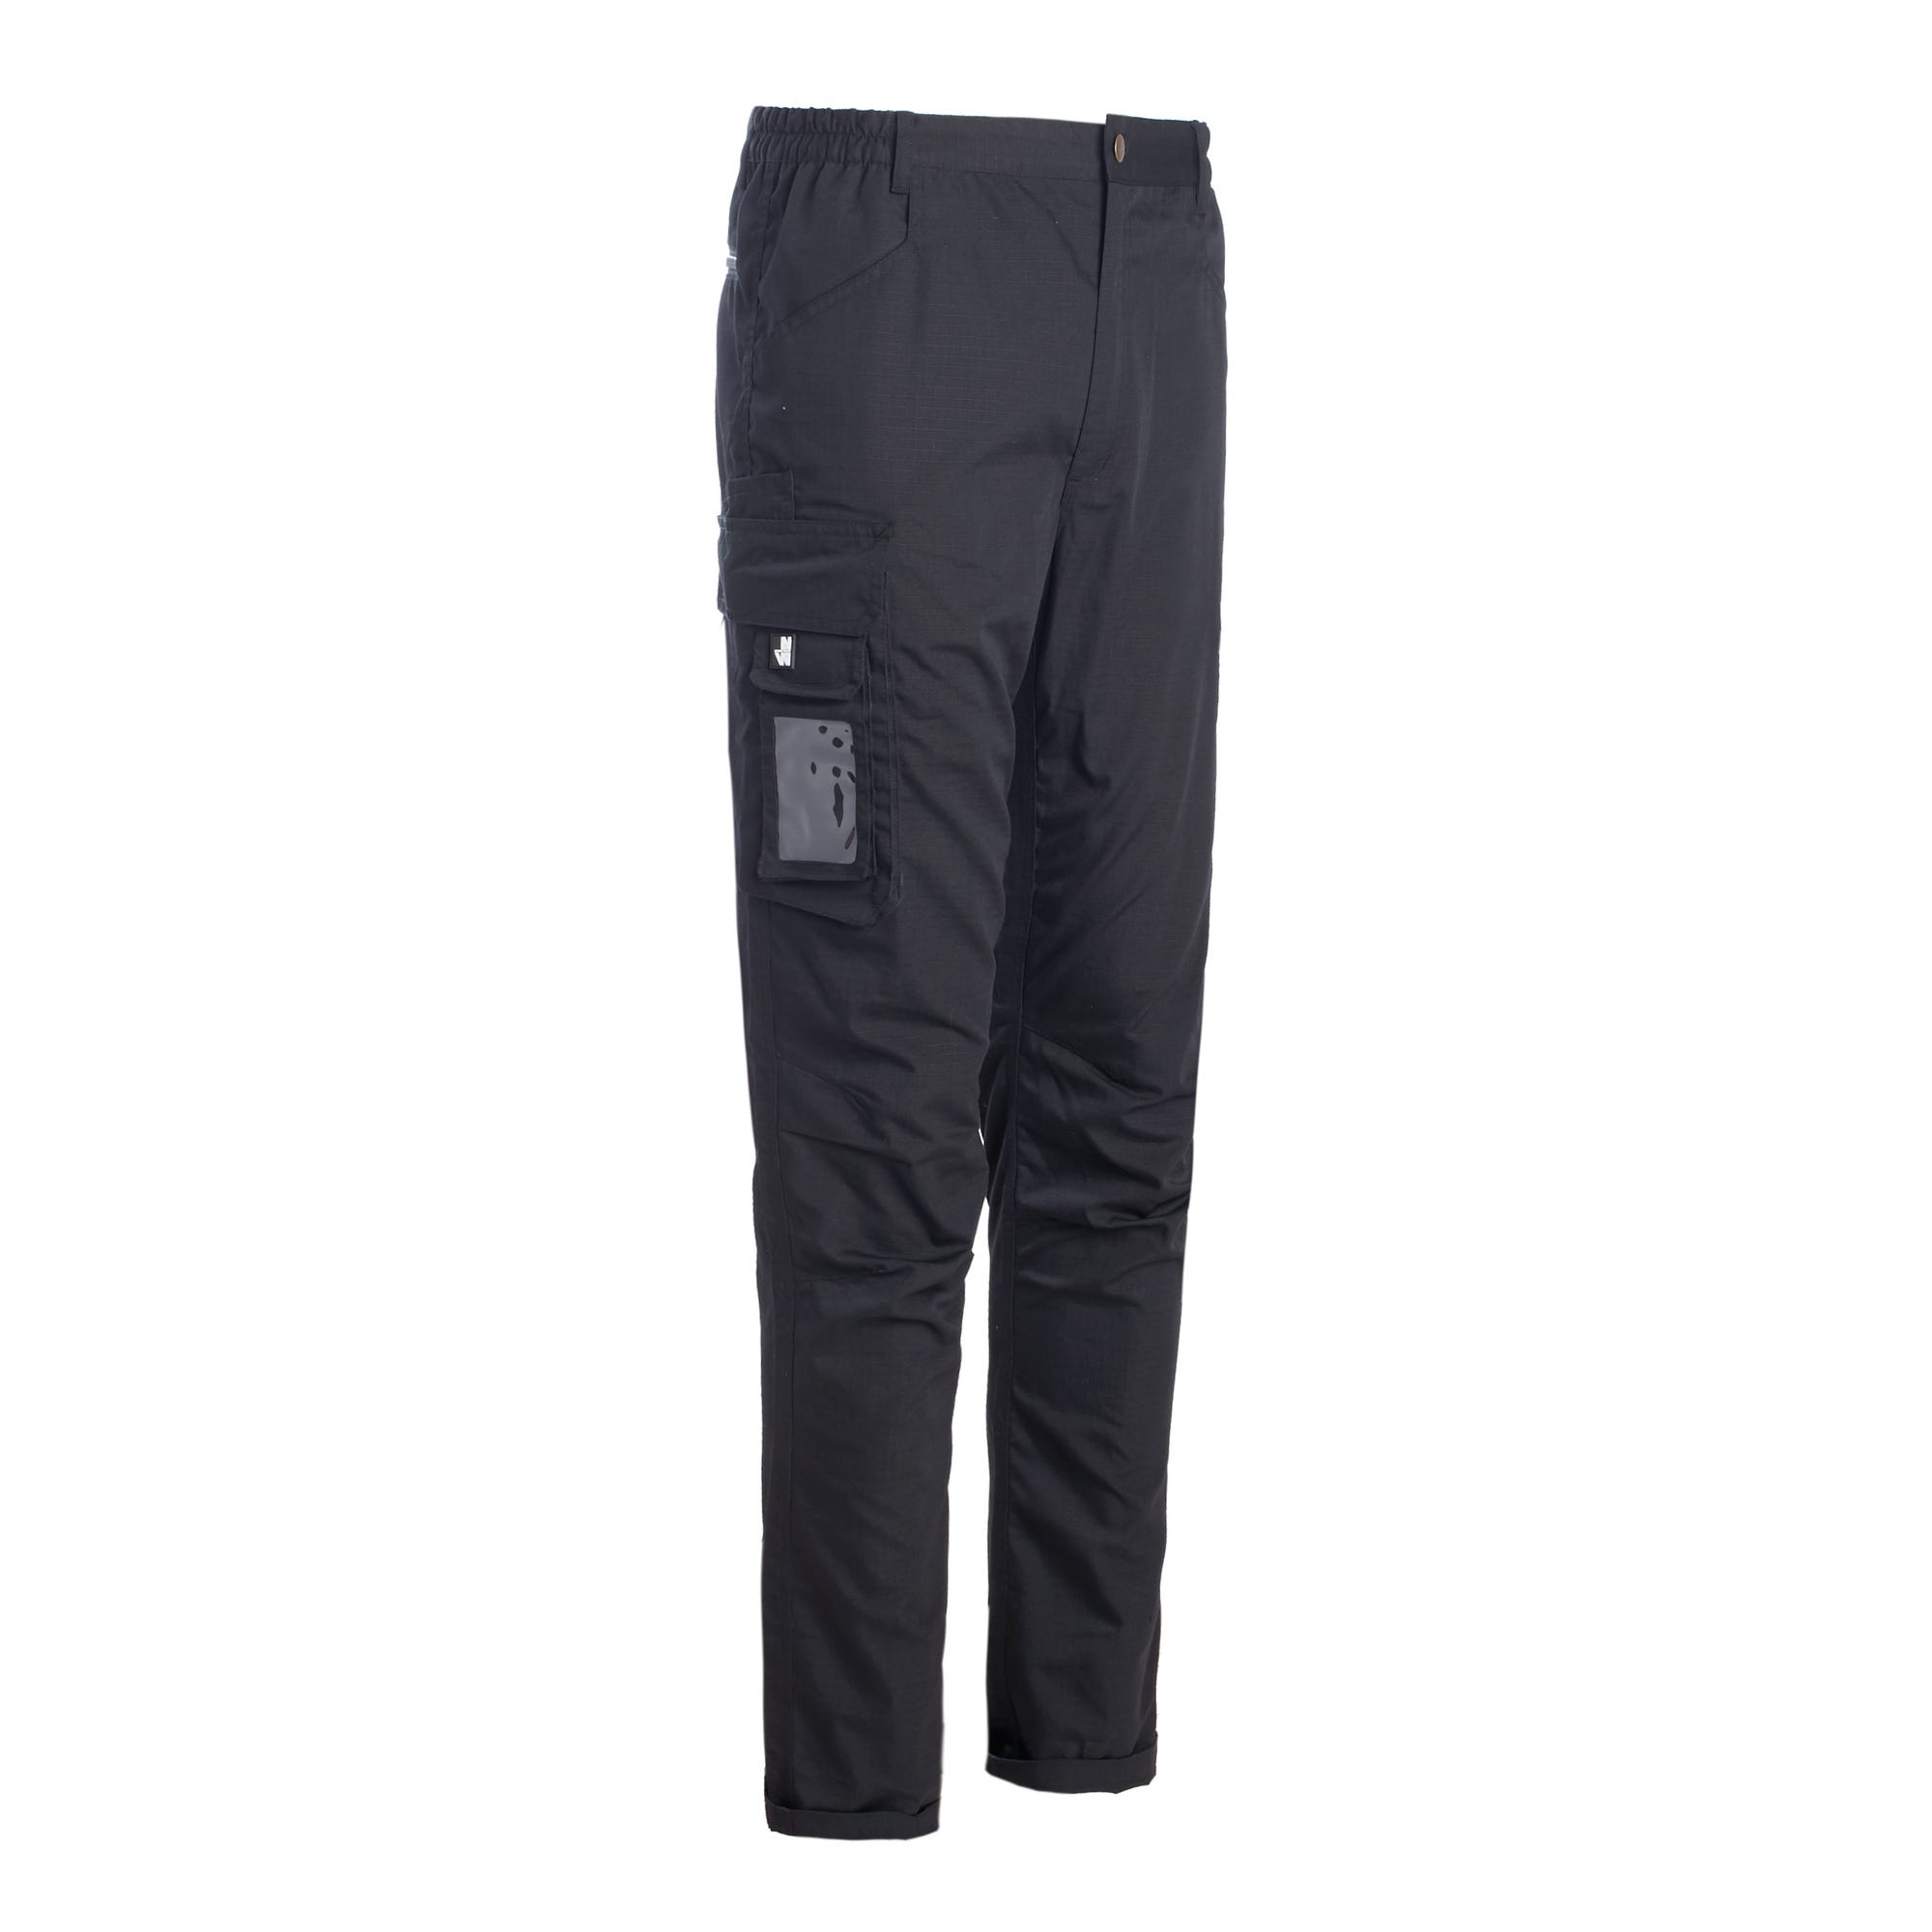 Pantalon de travail noir T.42 EDWARD - NORTH WAYS 3